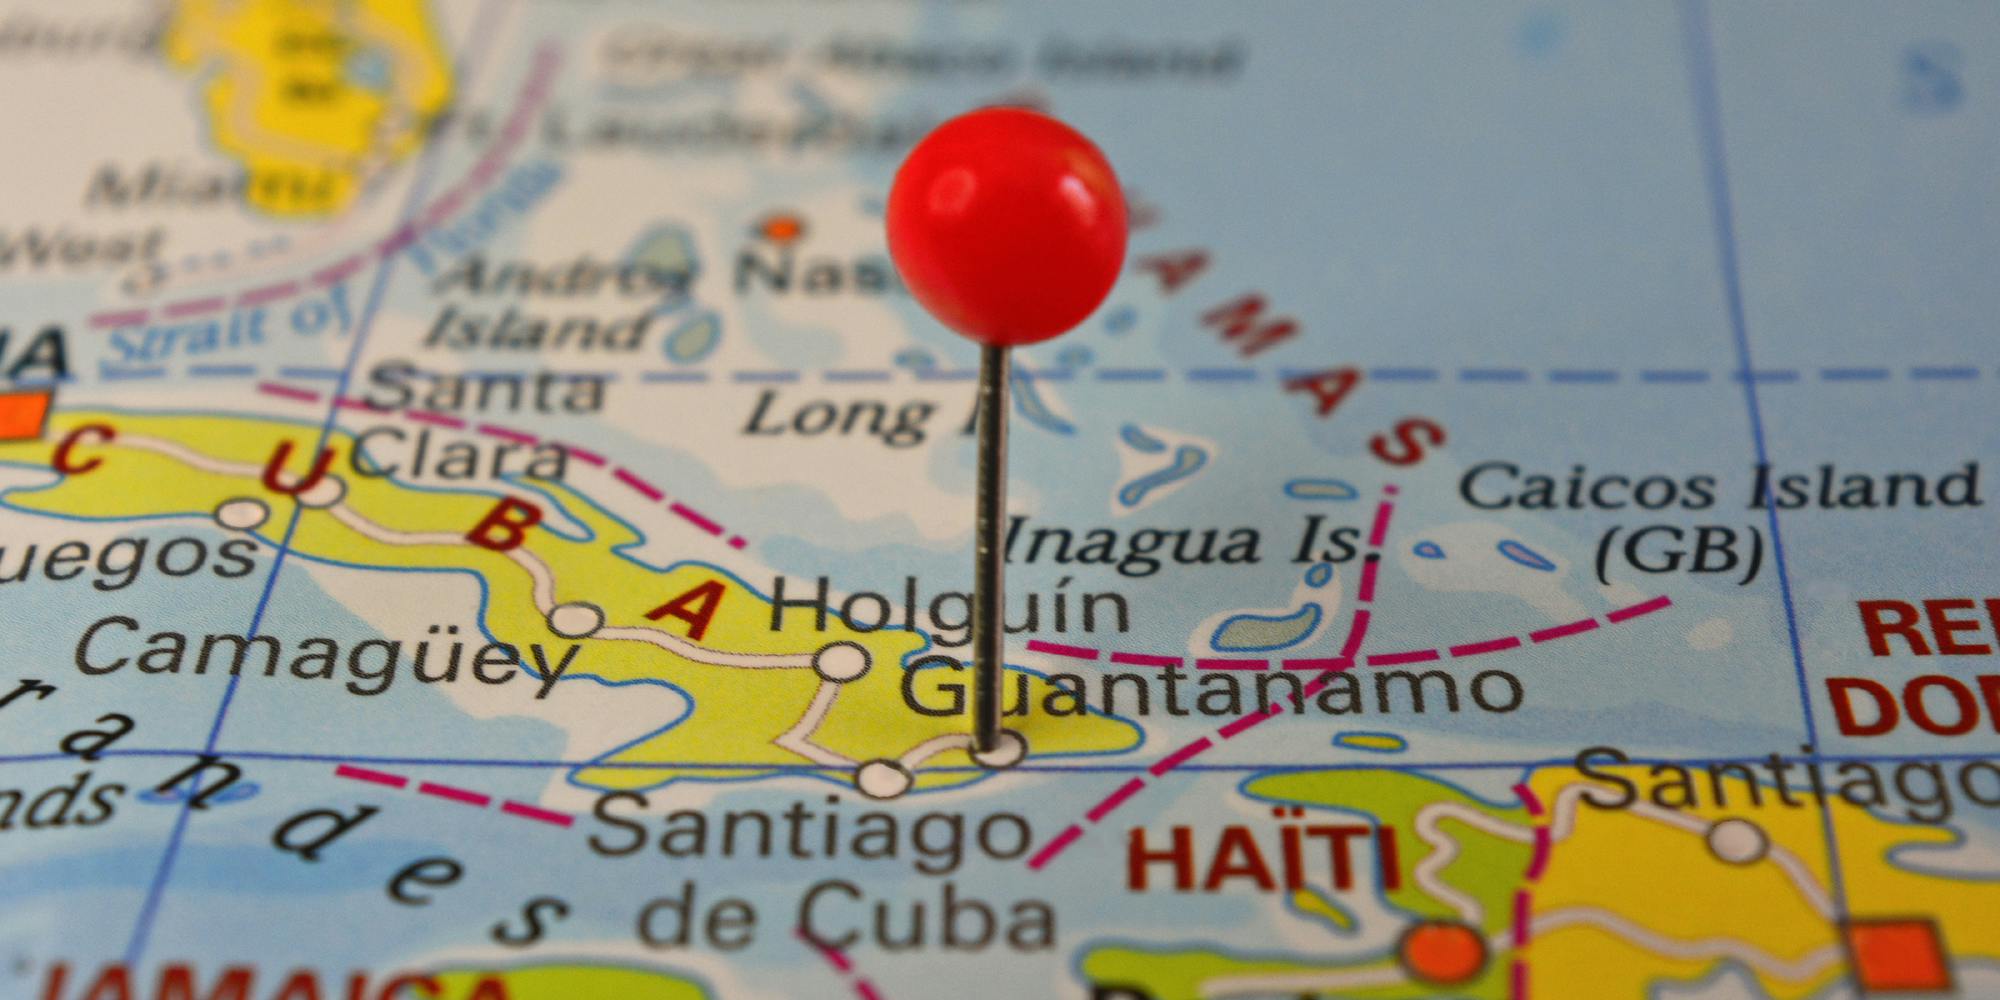 Guantanamo Bay pinned on map, Cuba